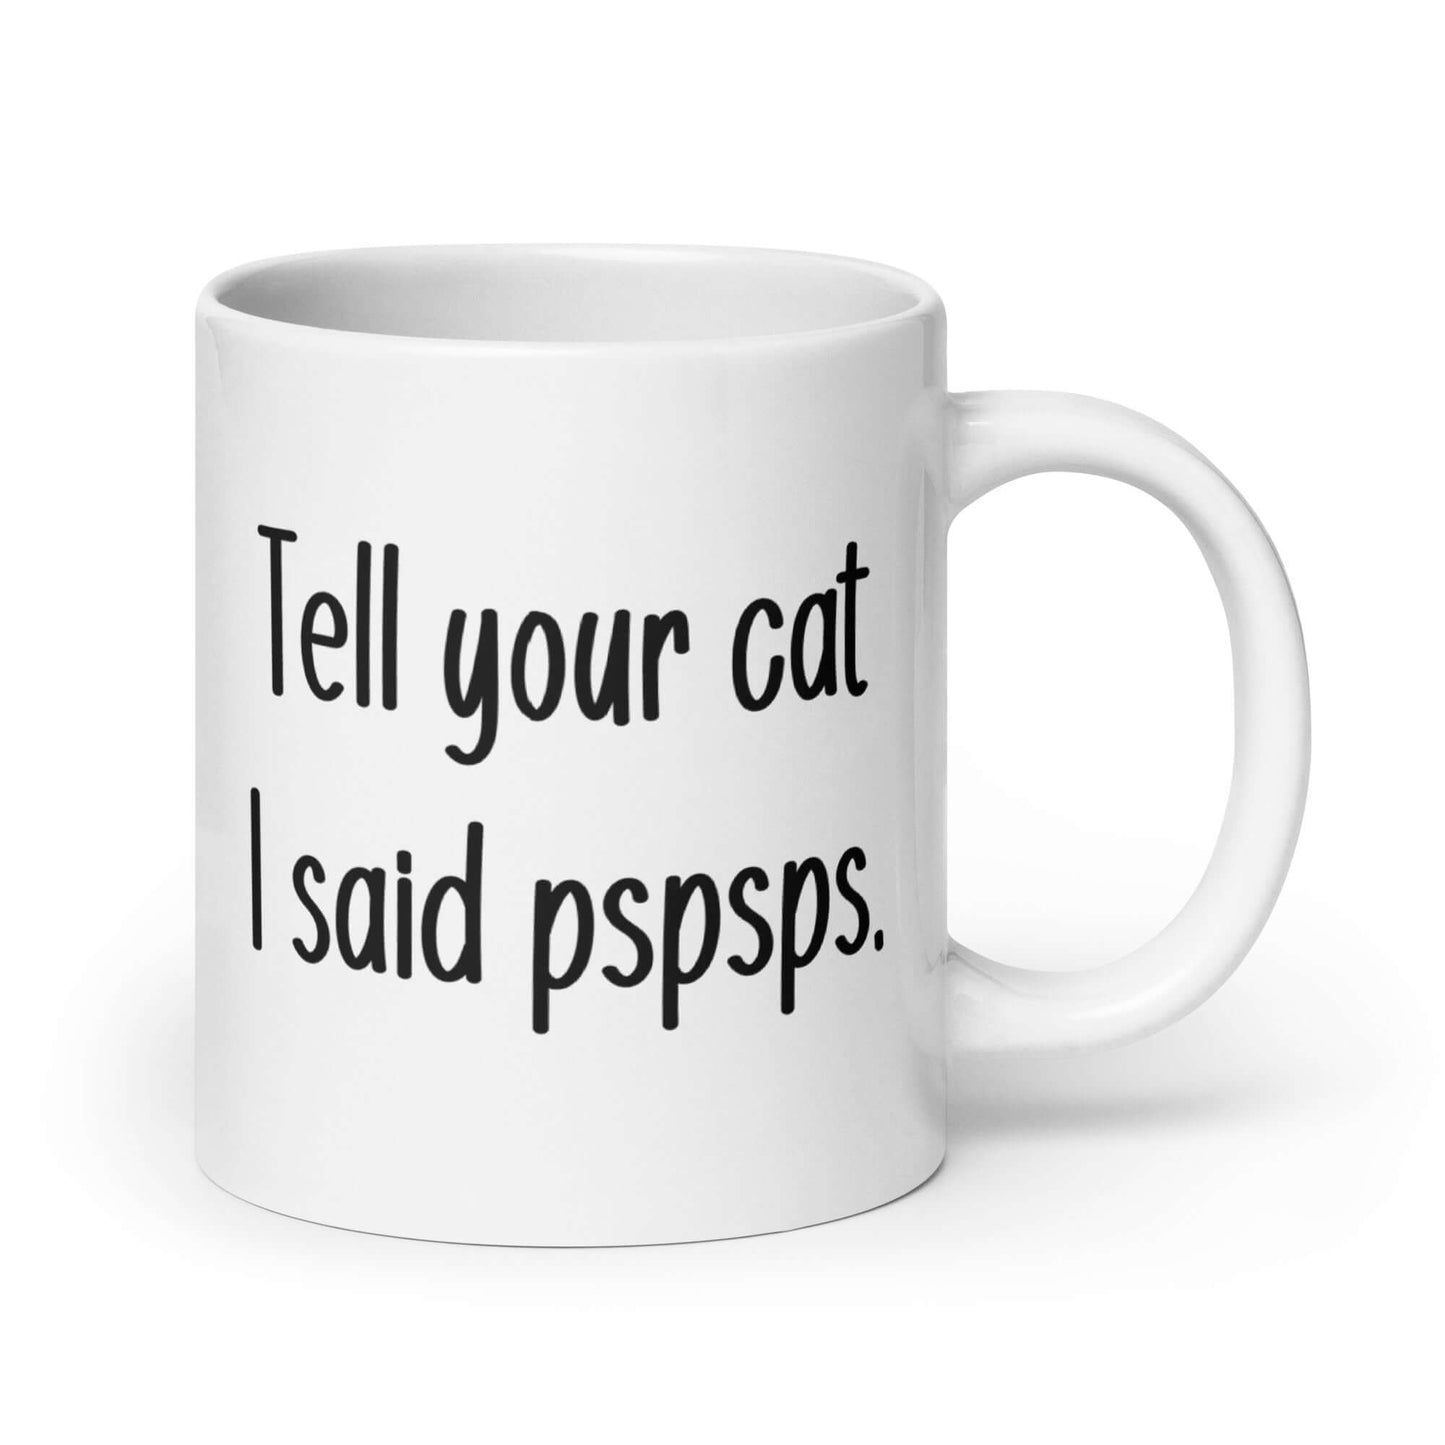 Tell your cat I said pspsps funny cat mug